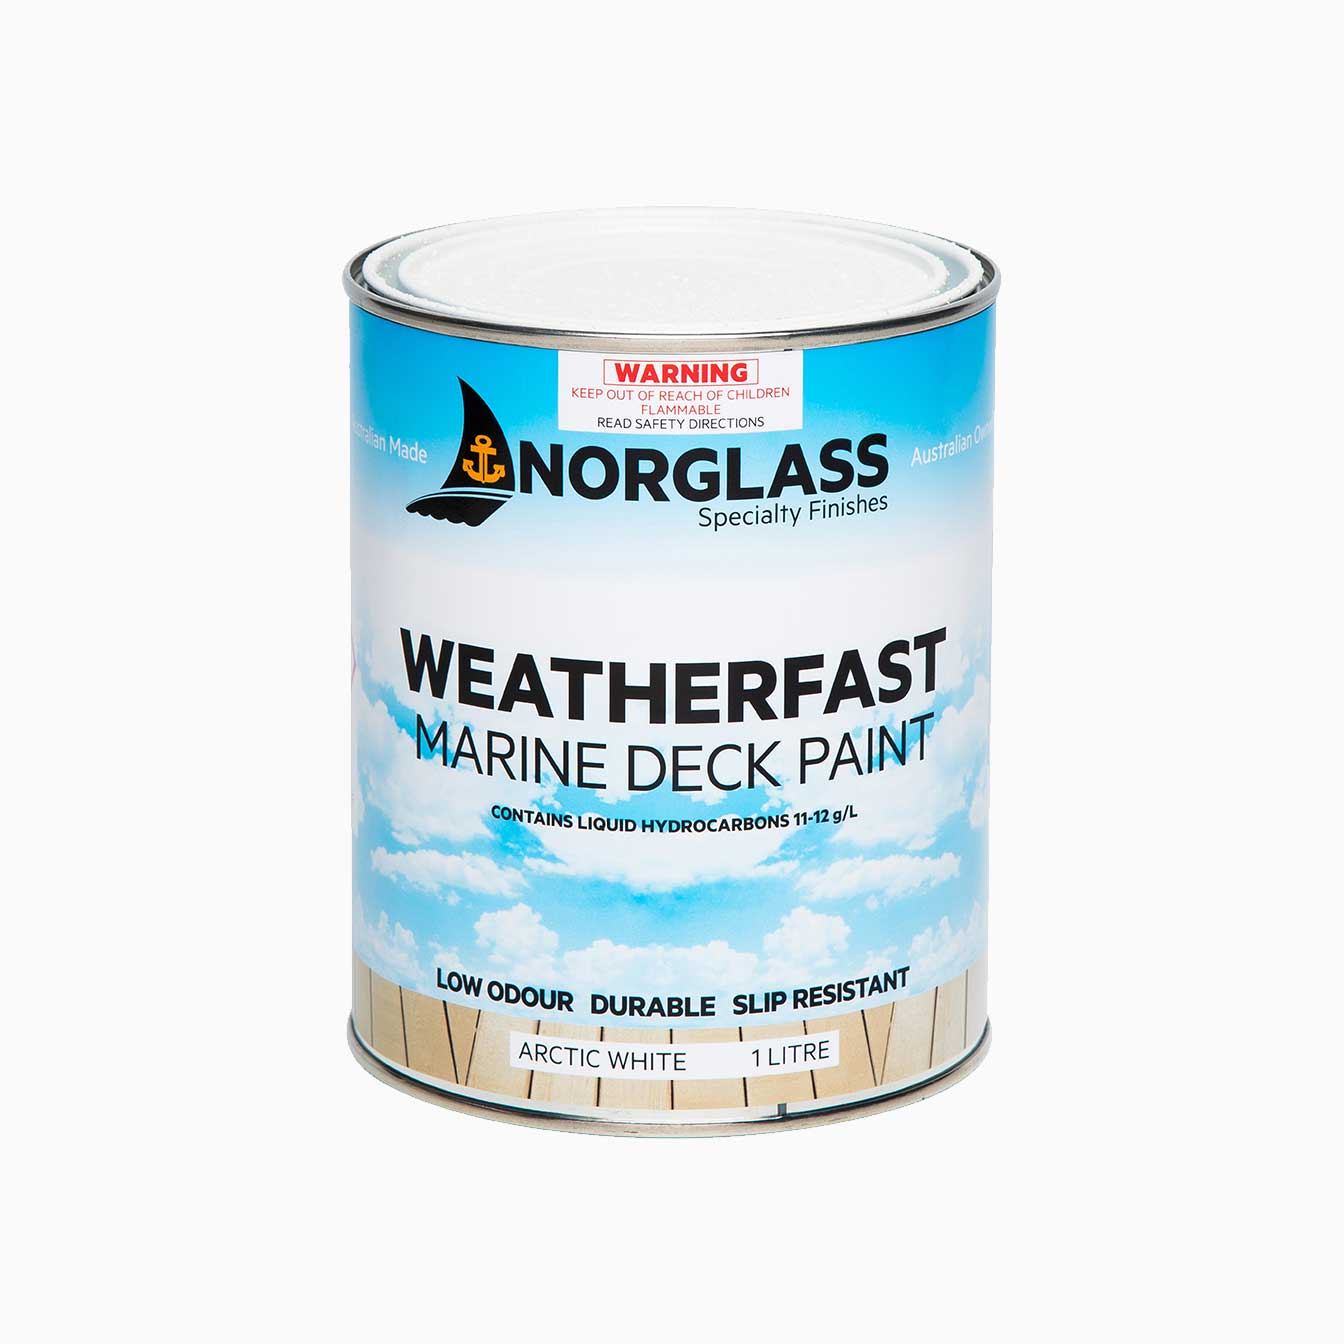 Weatherfast Deck Paint